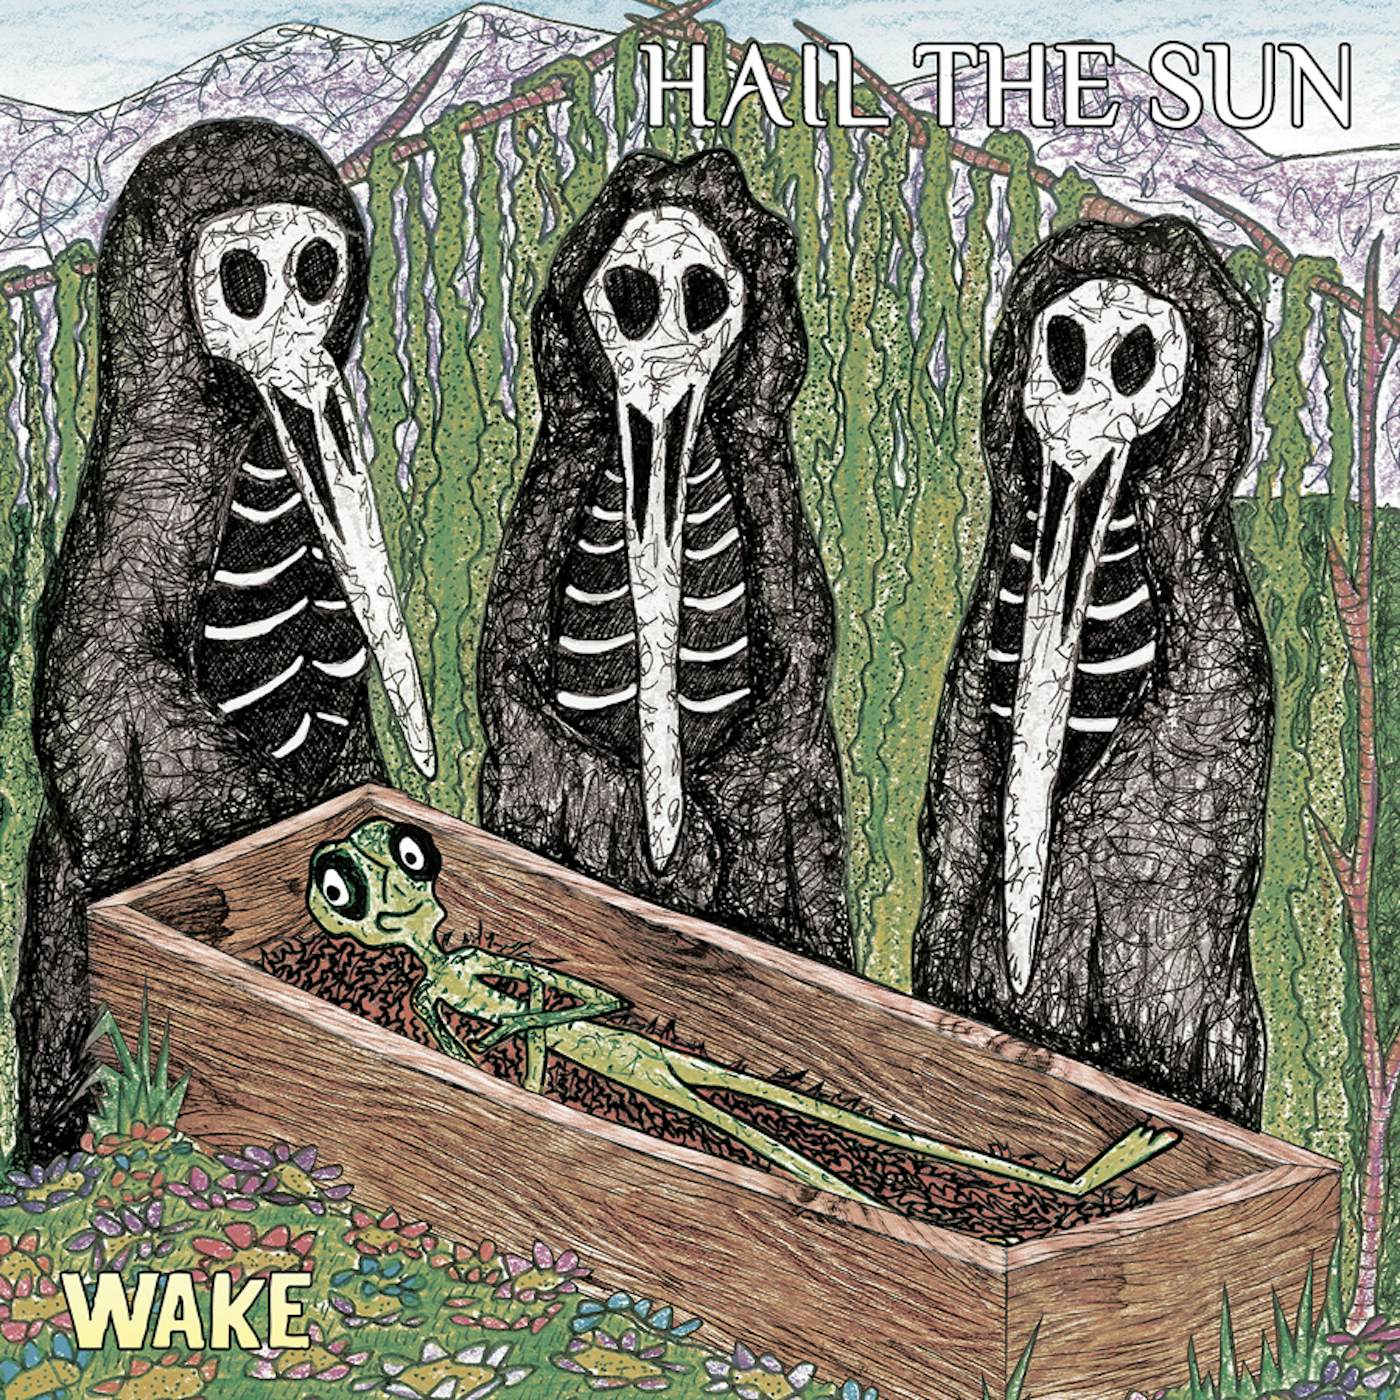 Hail The Sun Wake Vinyl Record